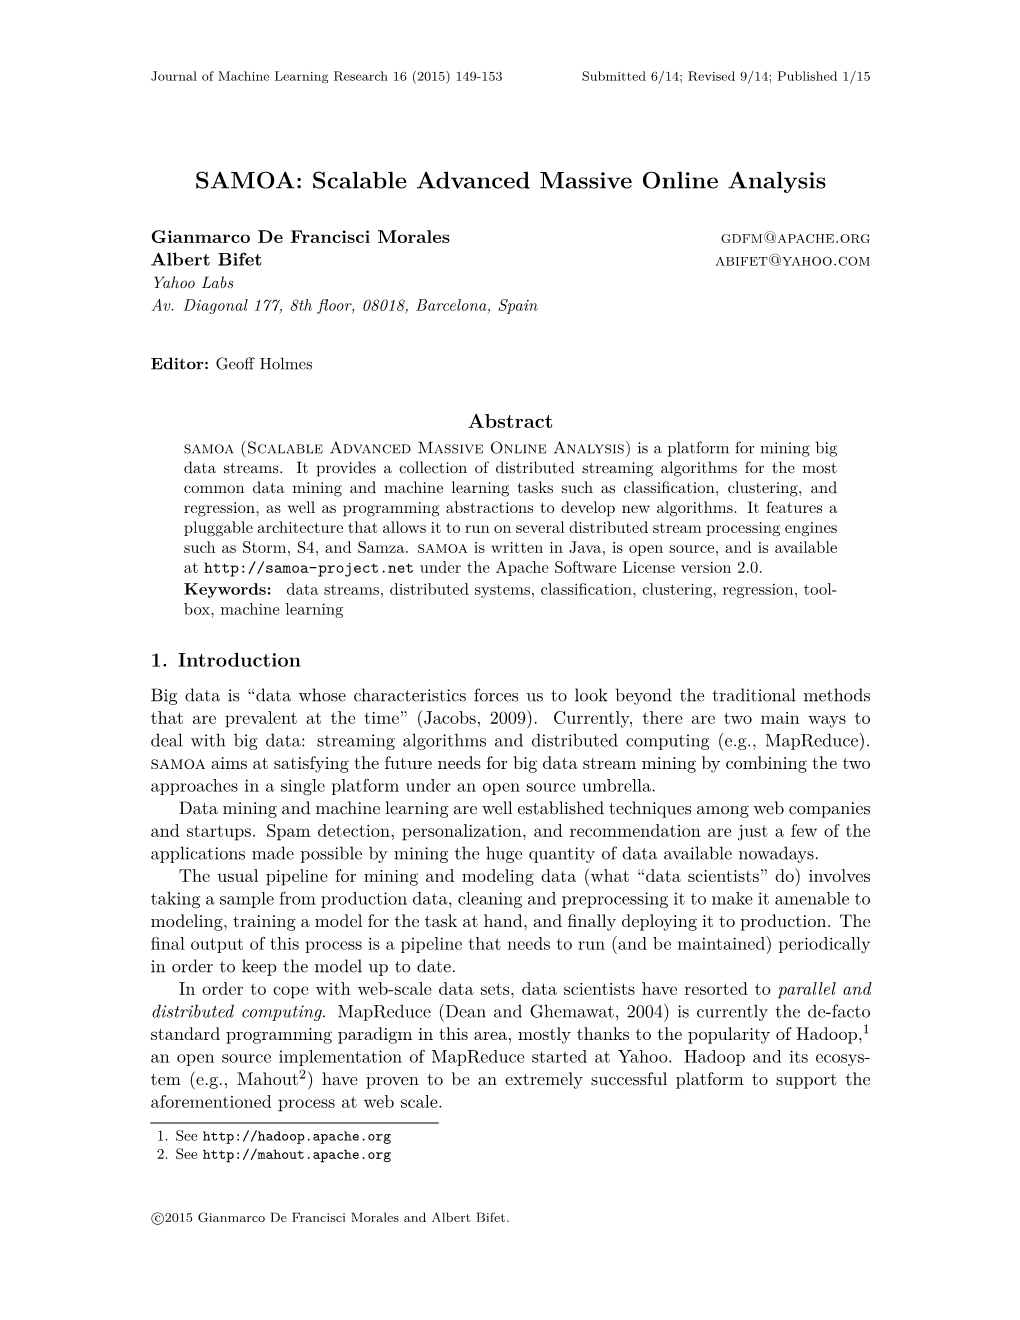 SAMOA: Scalable Advanced Massive Online Analysis